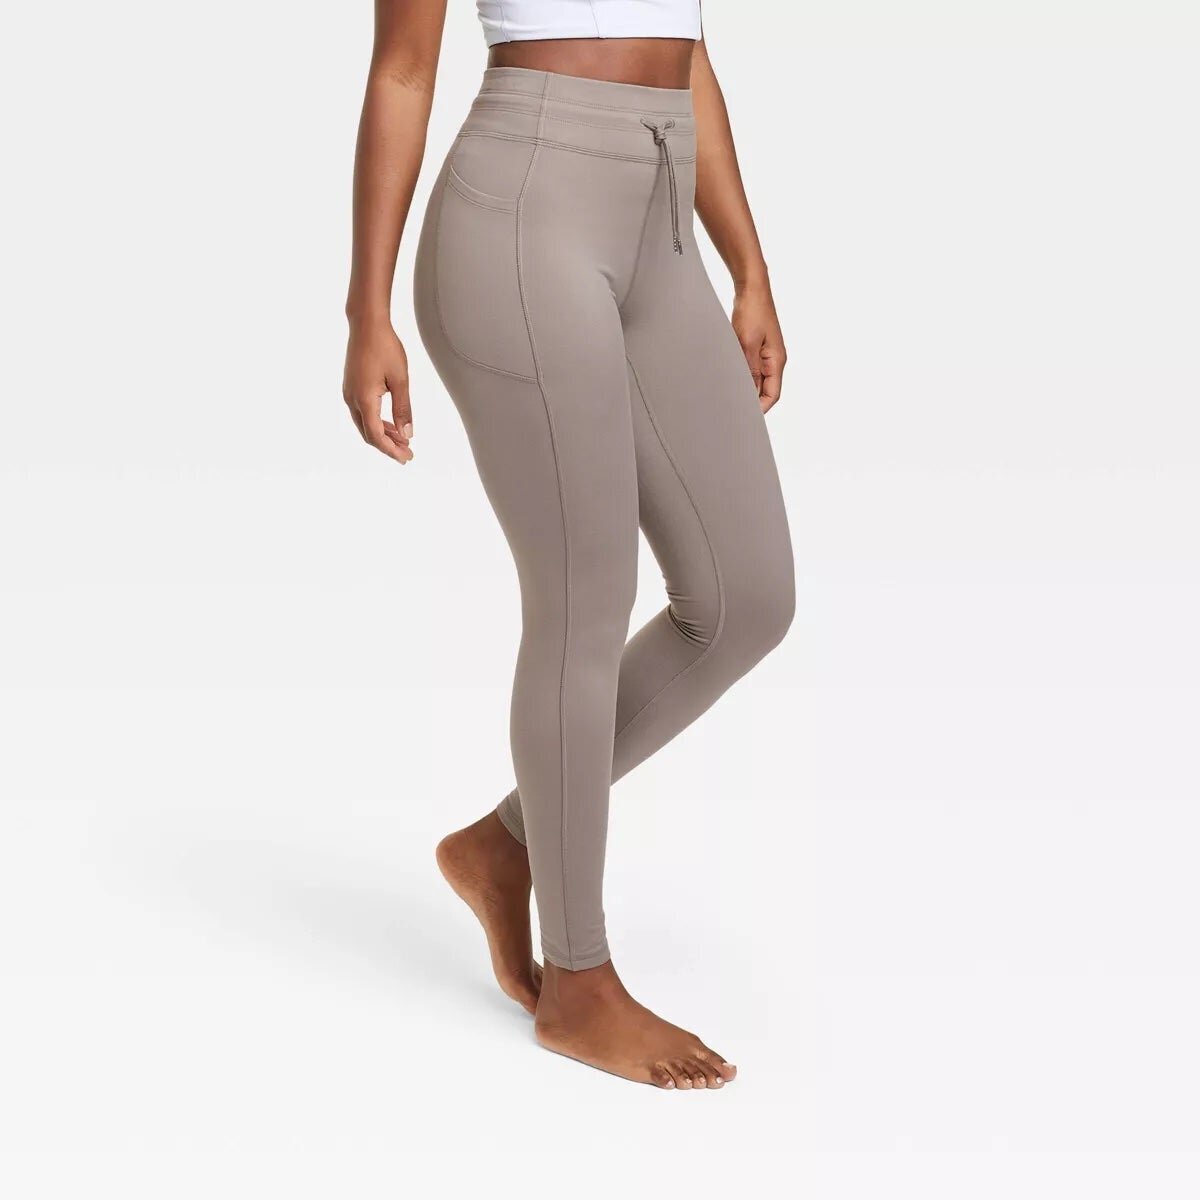 Model wearing sweat-wicking leggings with pockets